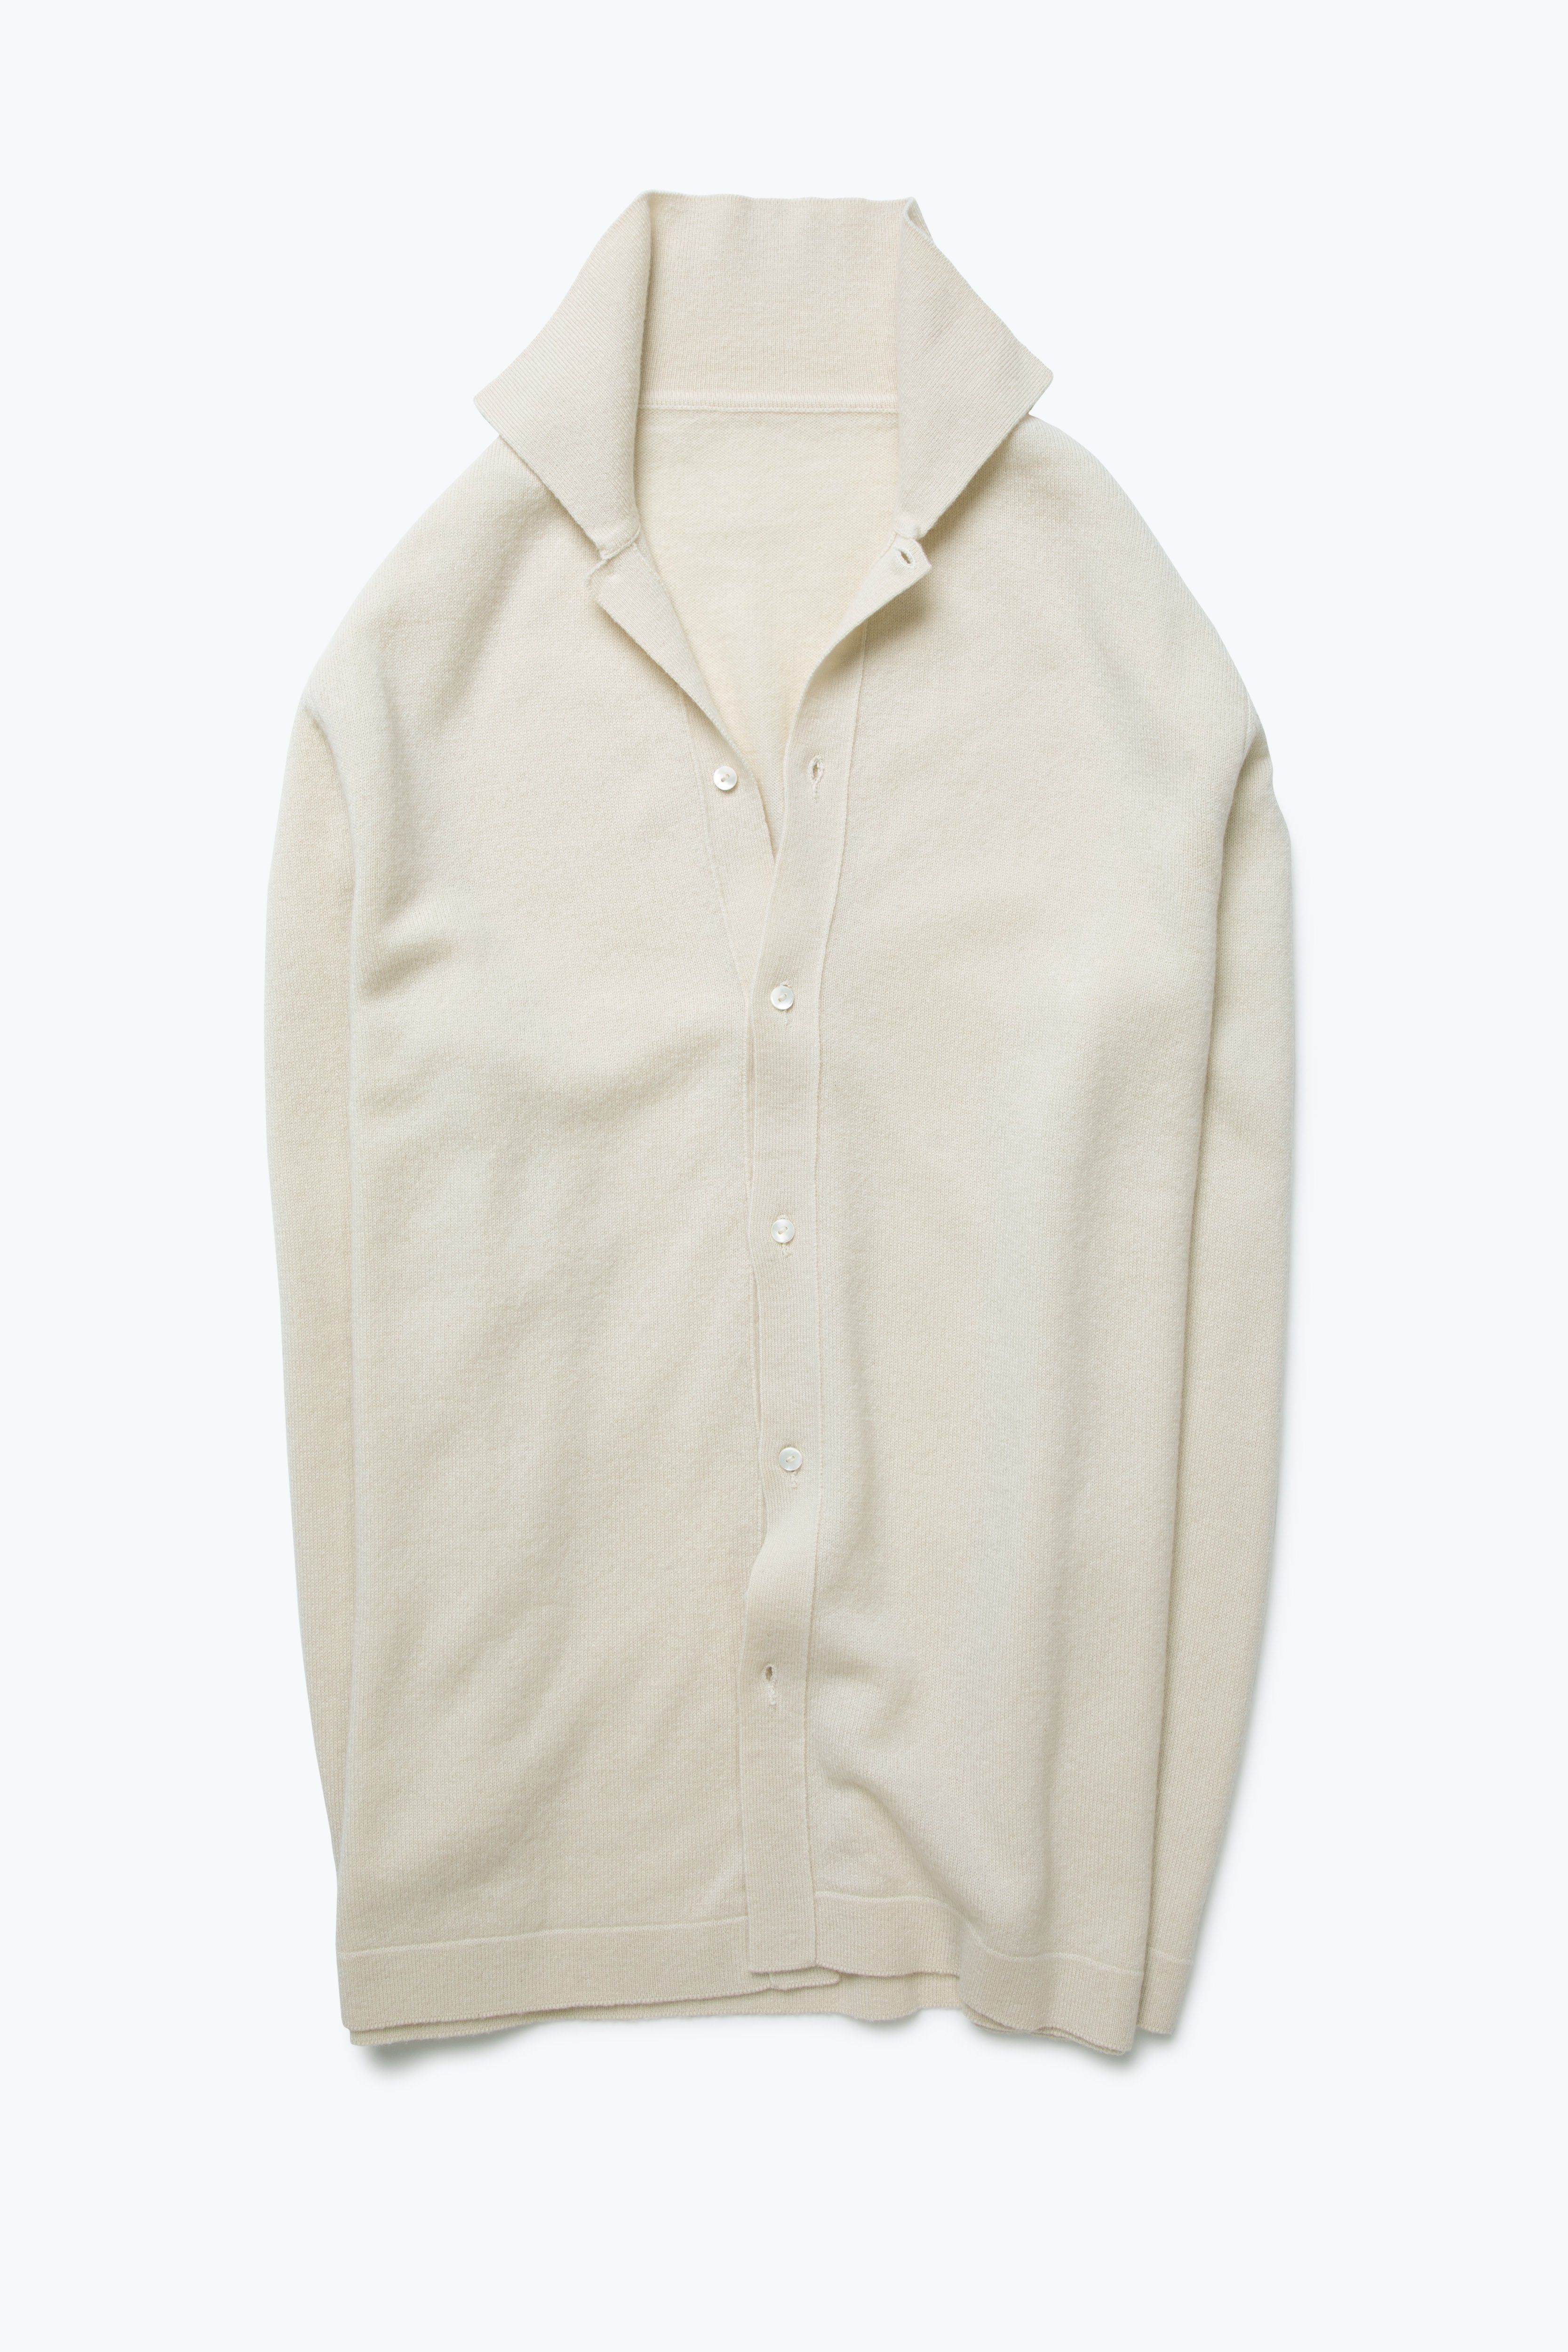 MTO - Knit Shirt (Ivory Cashmere)